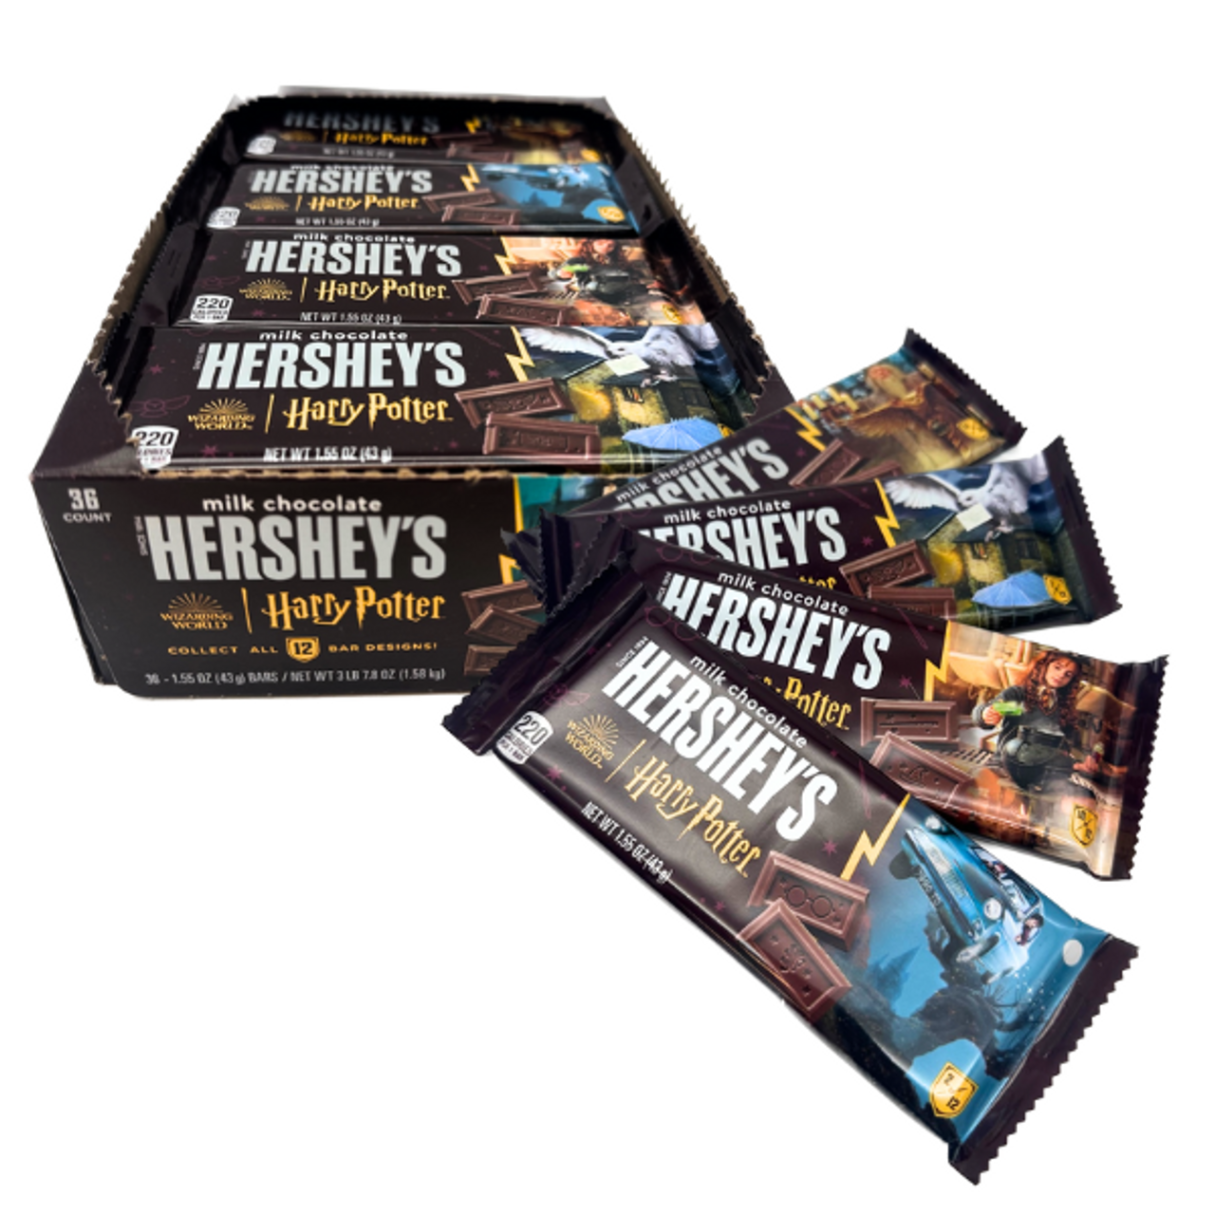 Hershey's Harry Potter Milk Chocolate Bars 1.55oz - 36ct